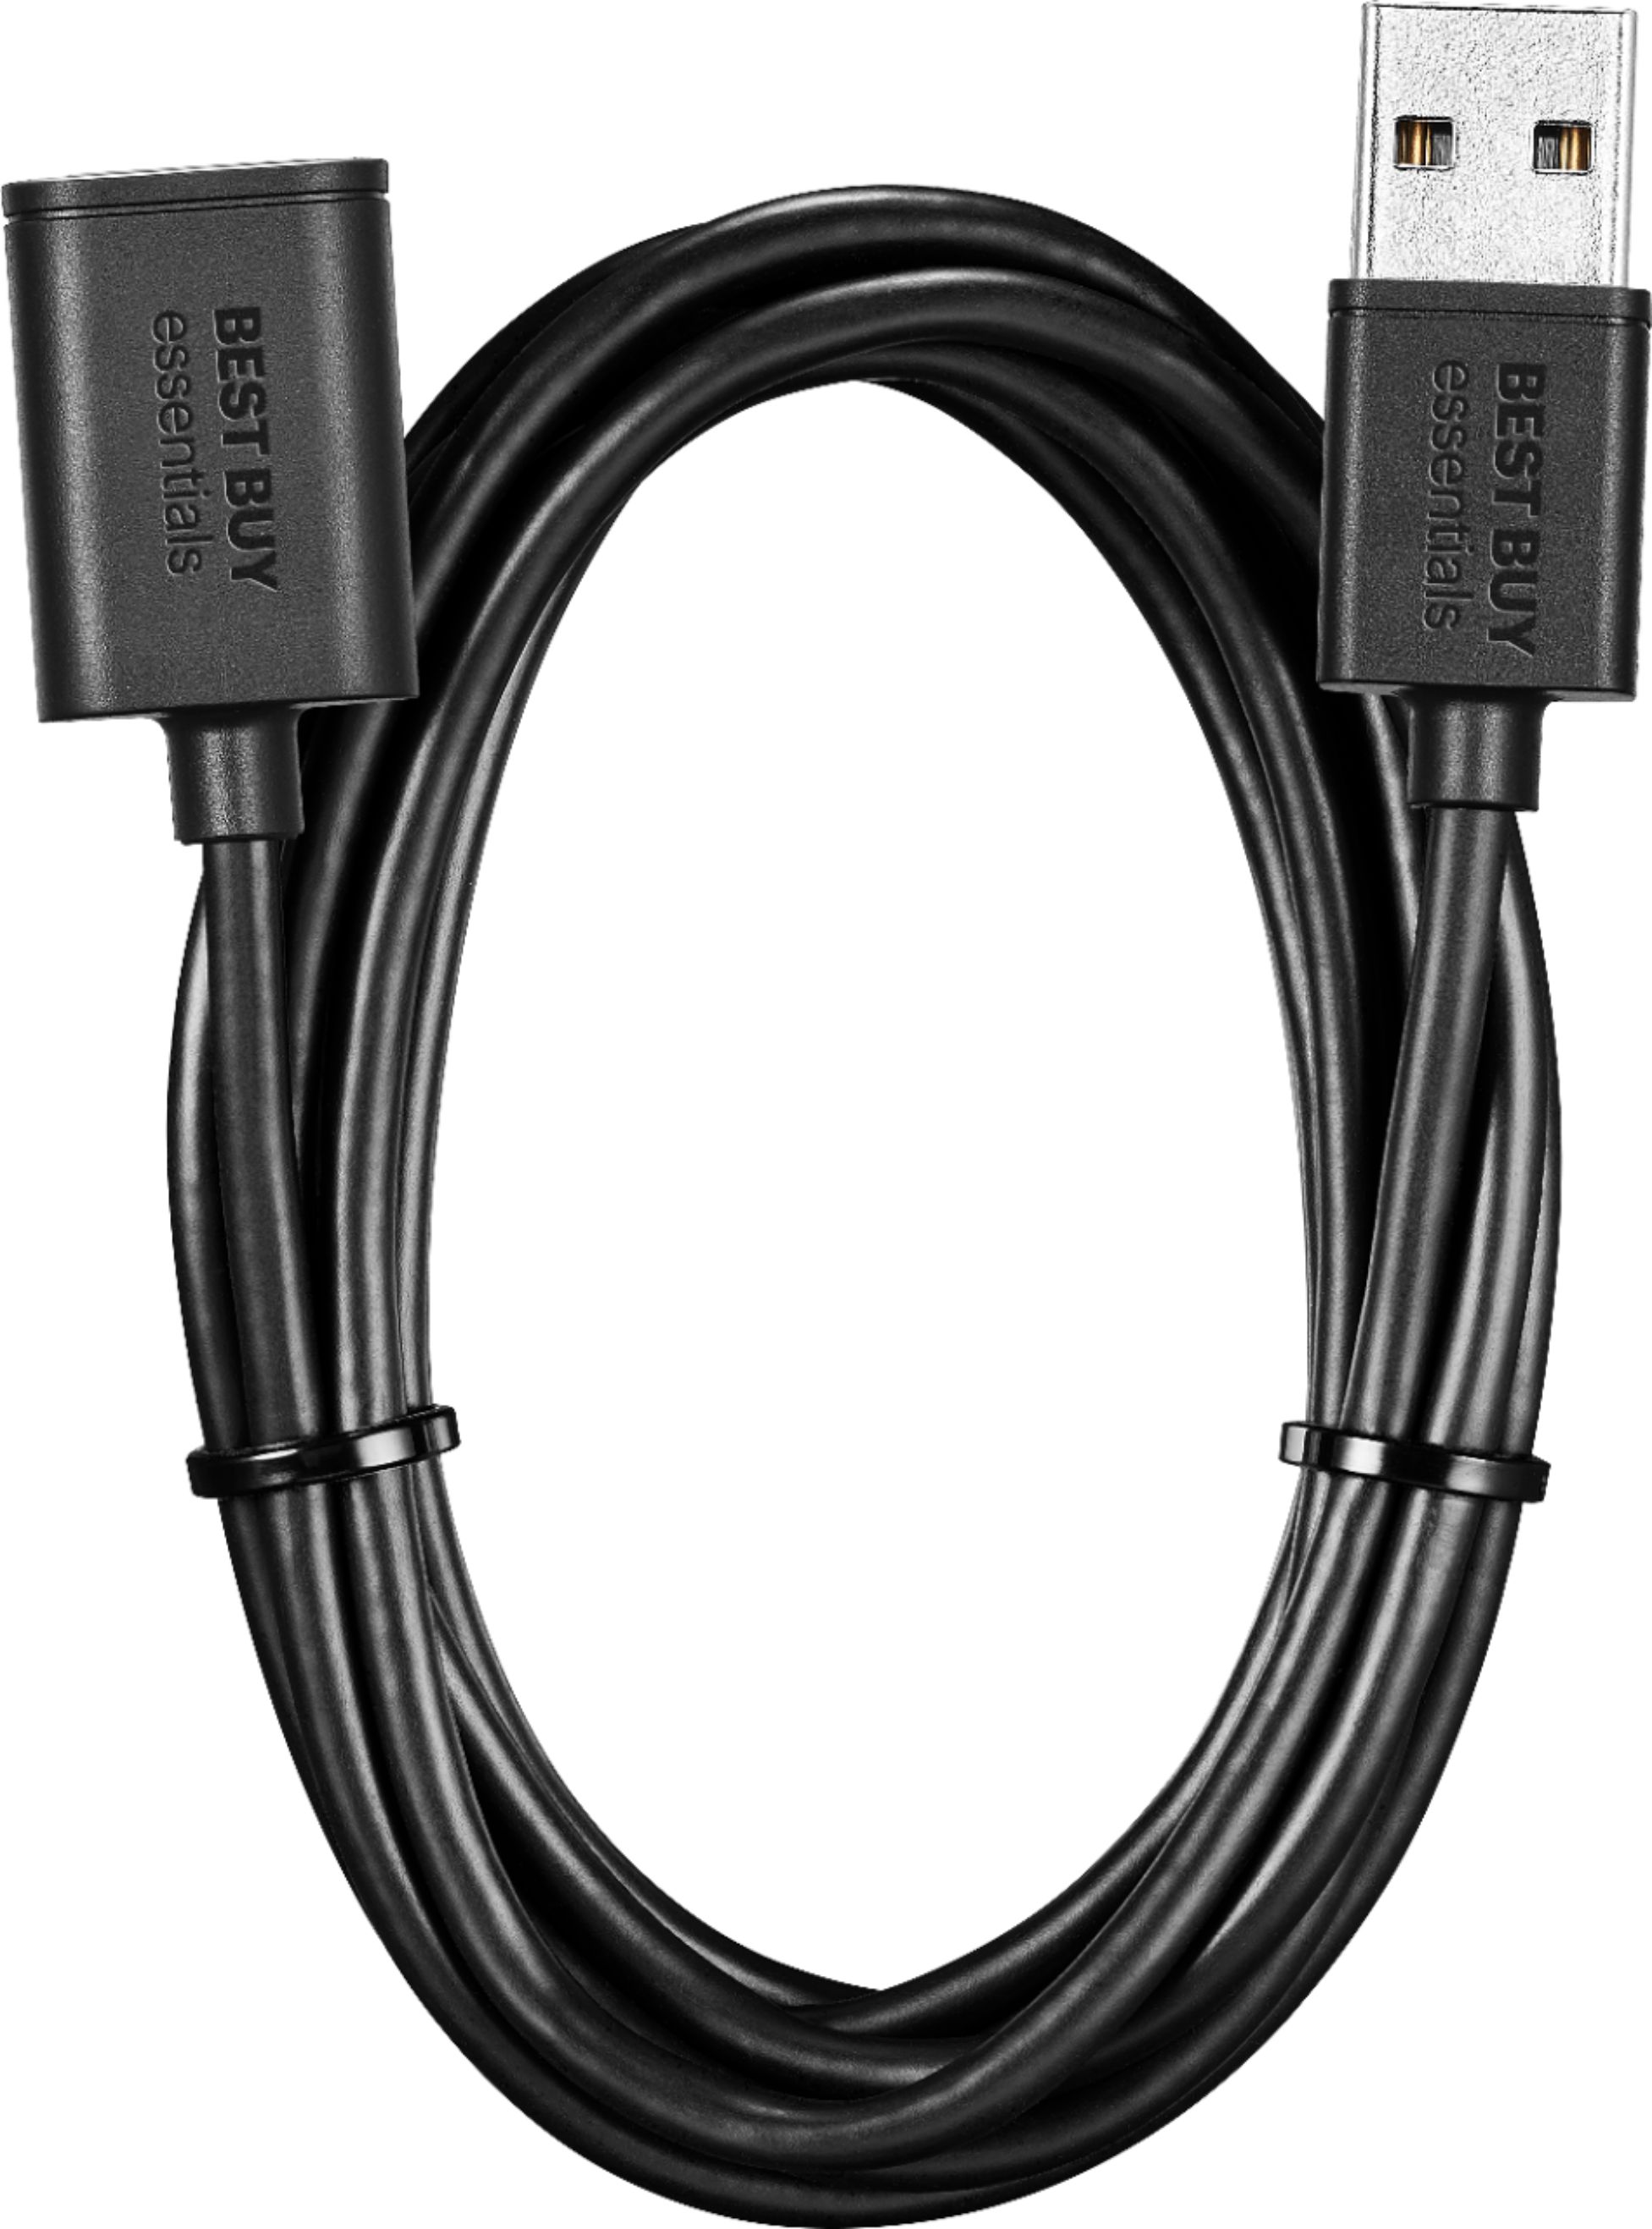 Cable 15cm Extensor USB 2.0 USBEXTAA6IN